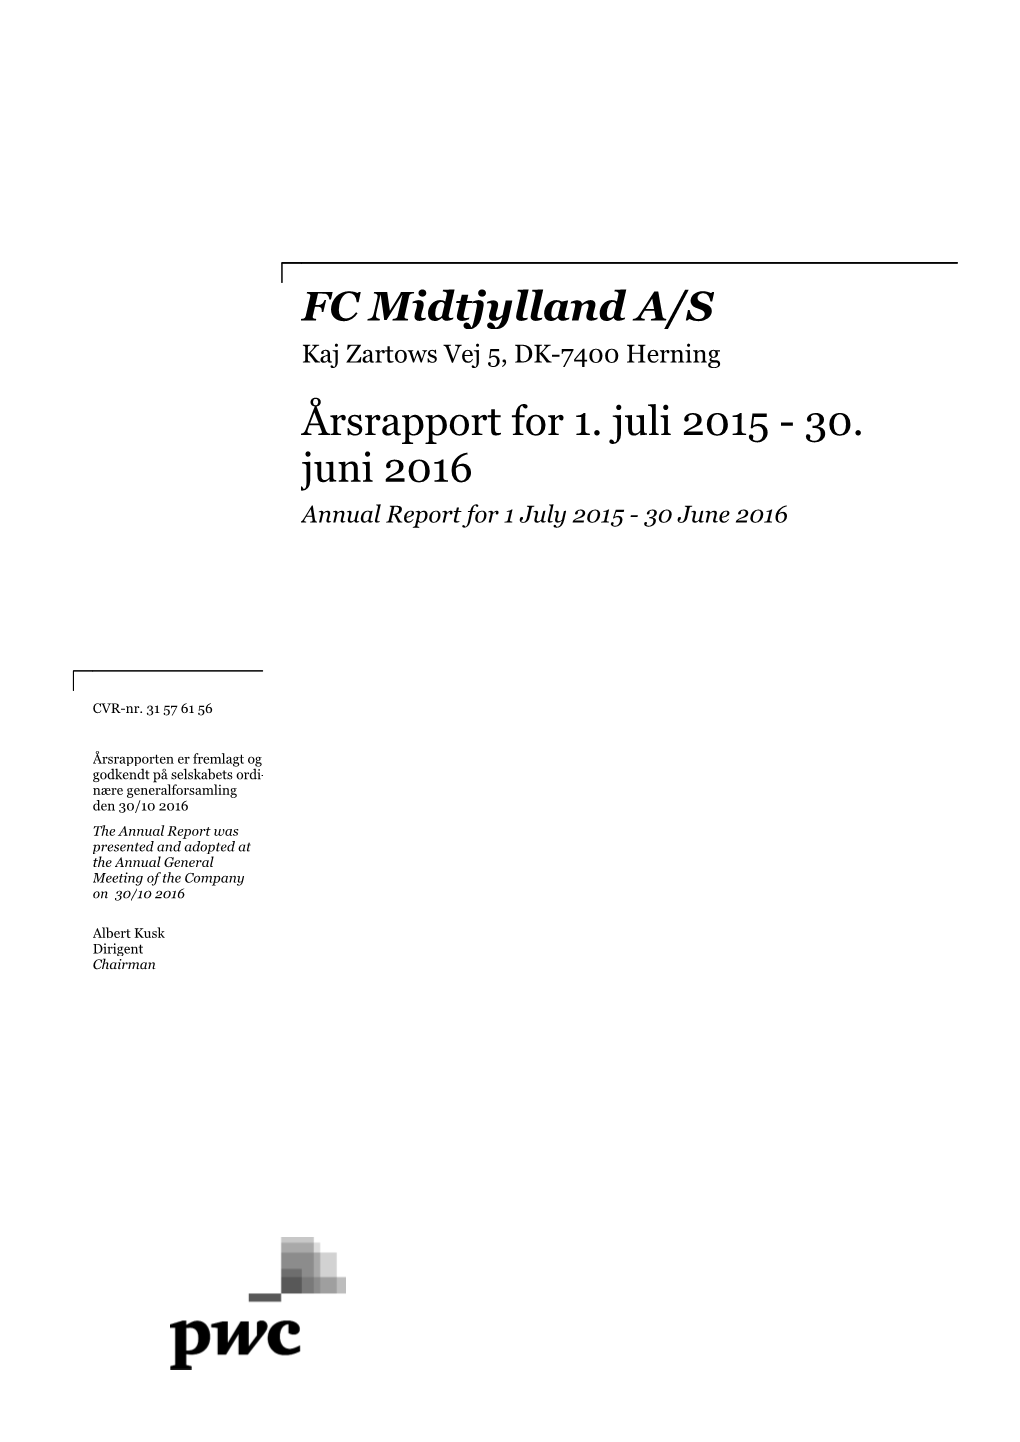 FC Midtjylland A/S Årsrapport for 1. Juli 2015